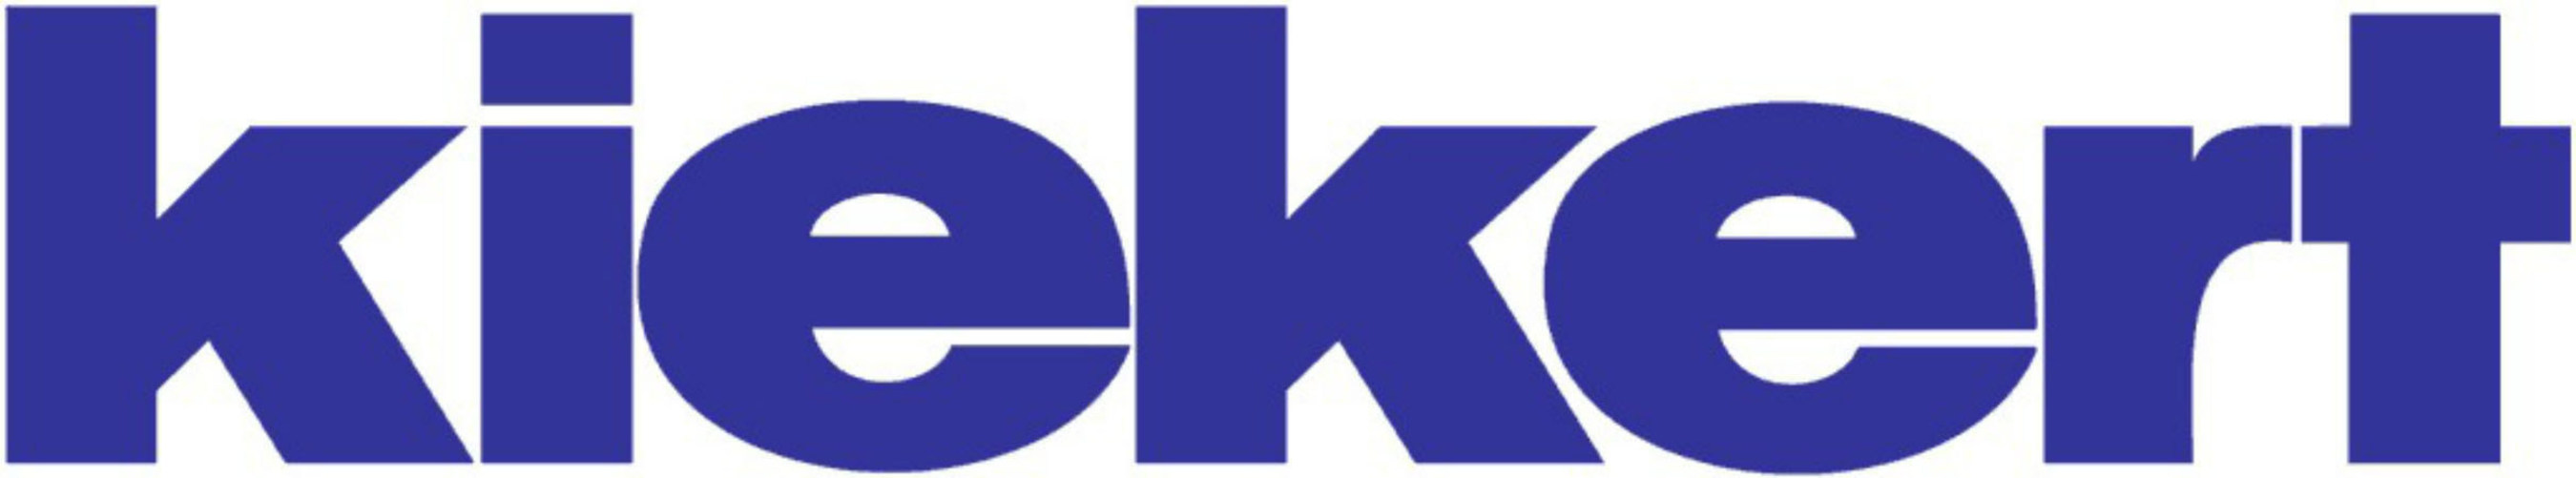 Kiekert Logo.